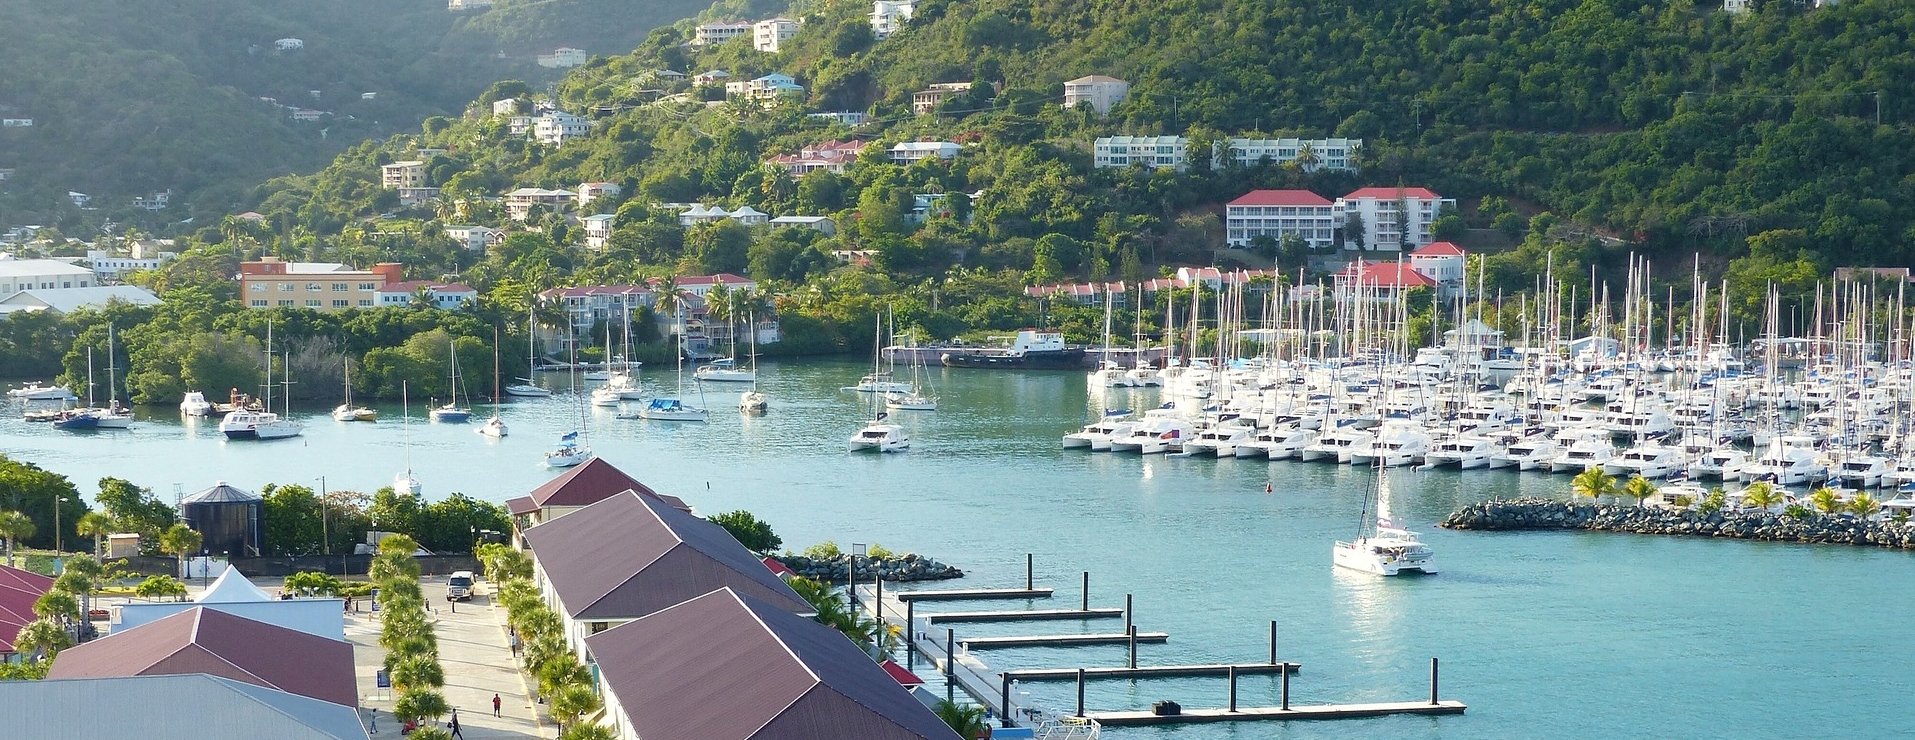 British Virgin Islands HOTEL|イギリス領ヴァージン諸島 ホテル